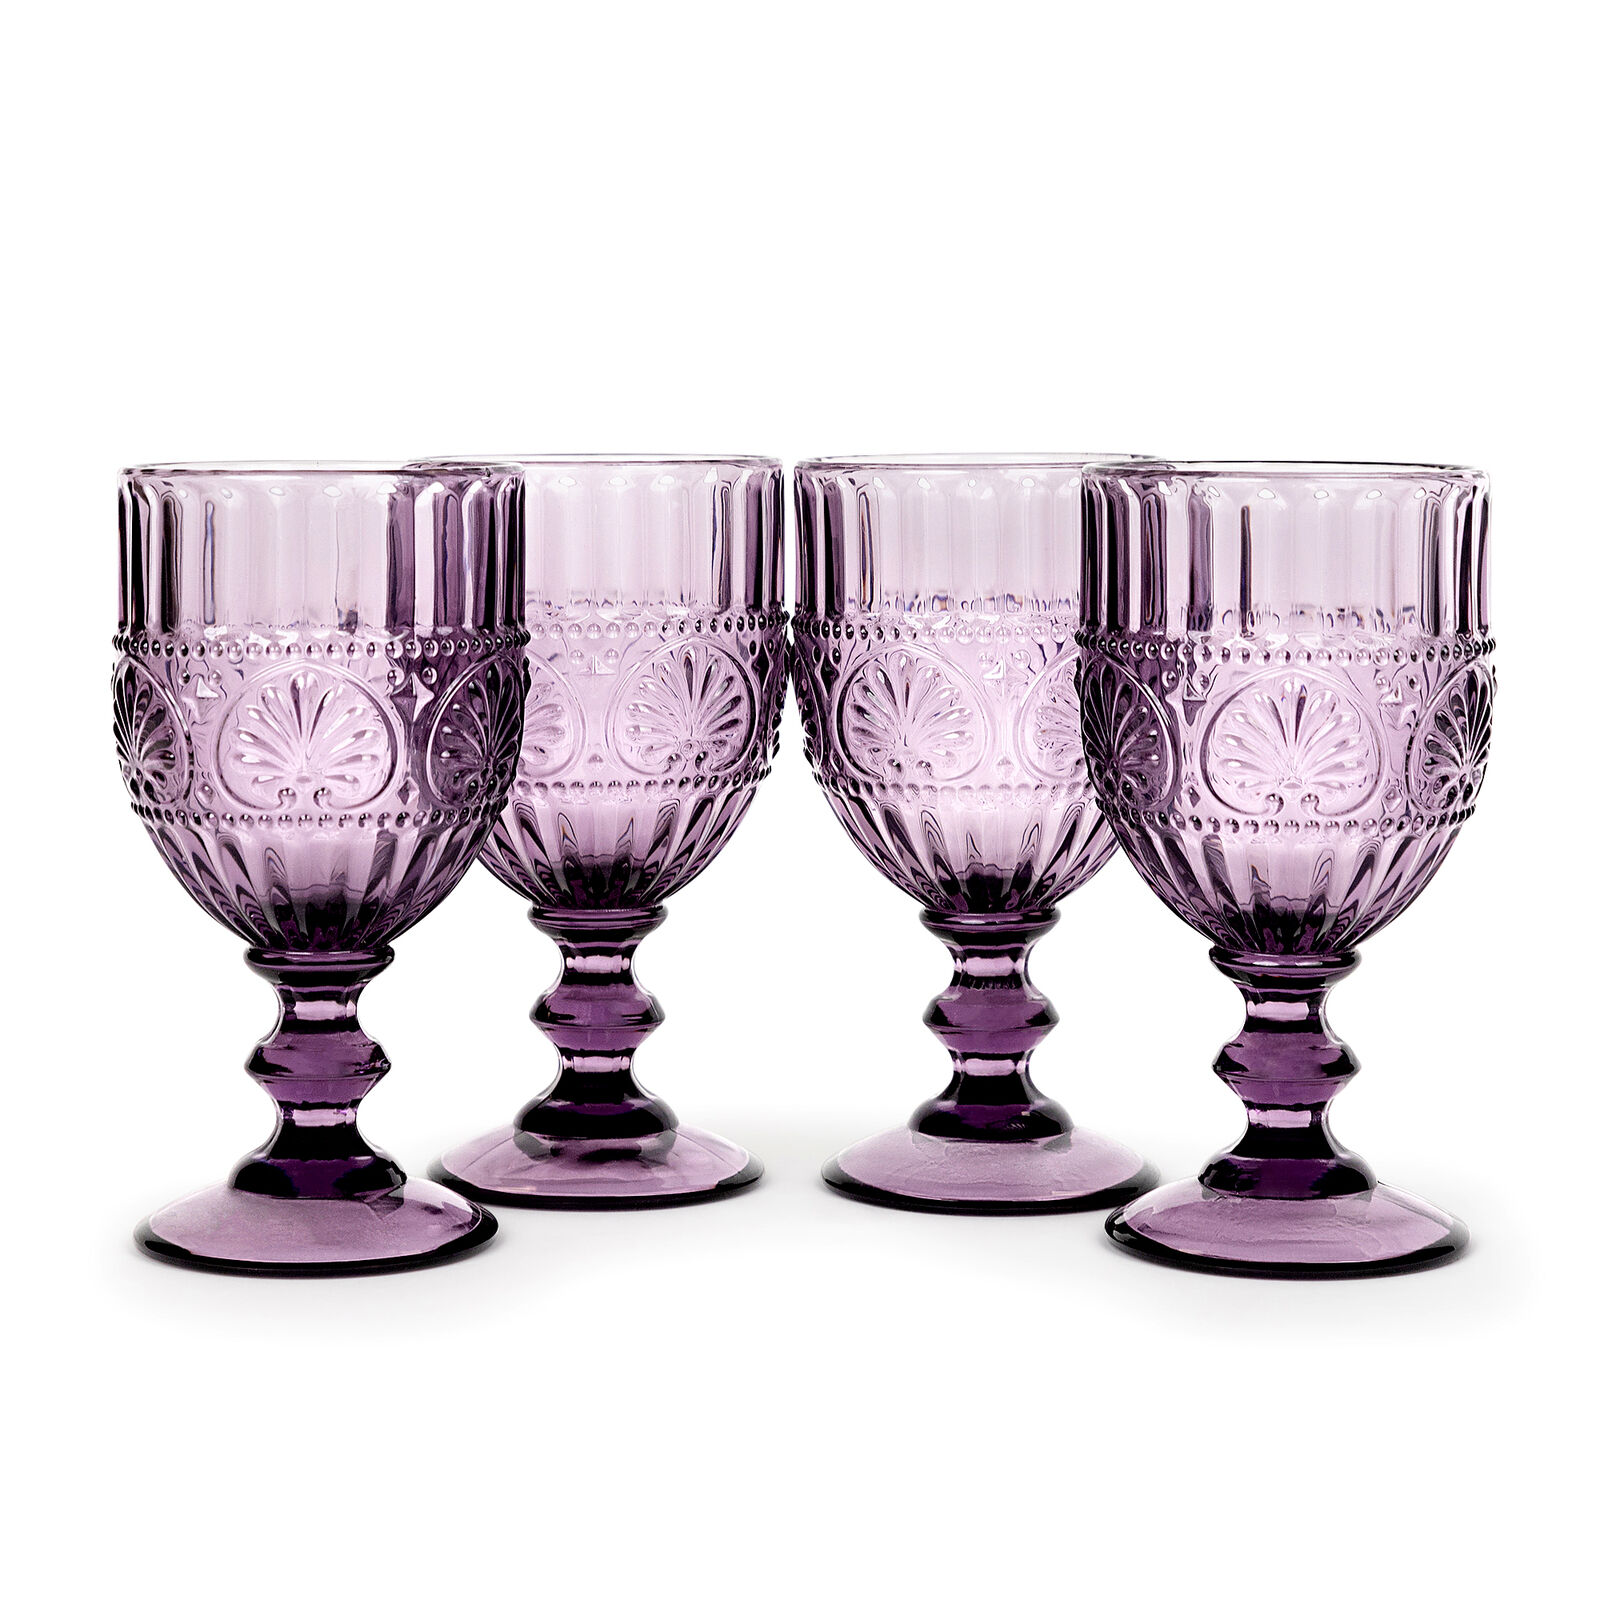 American Atelier Vintage Wine Glasses, Set of 4, 12-Ounce Capacity - Purple